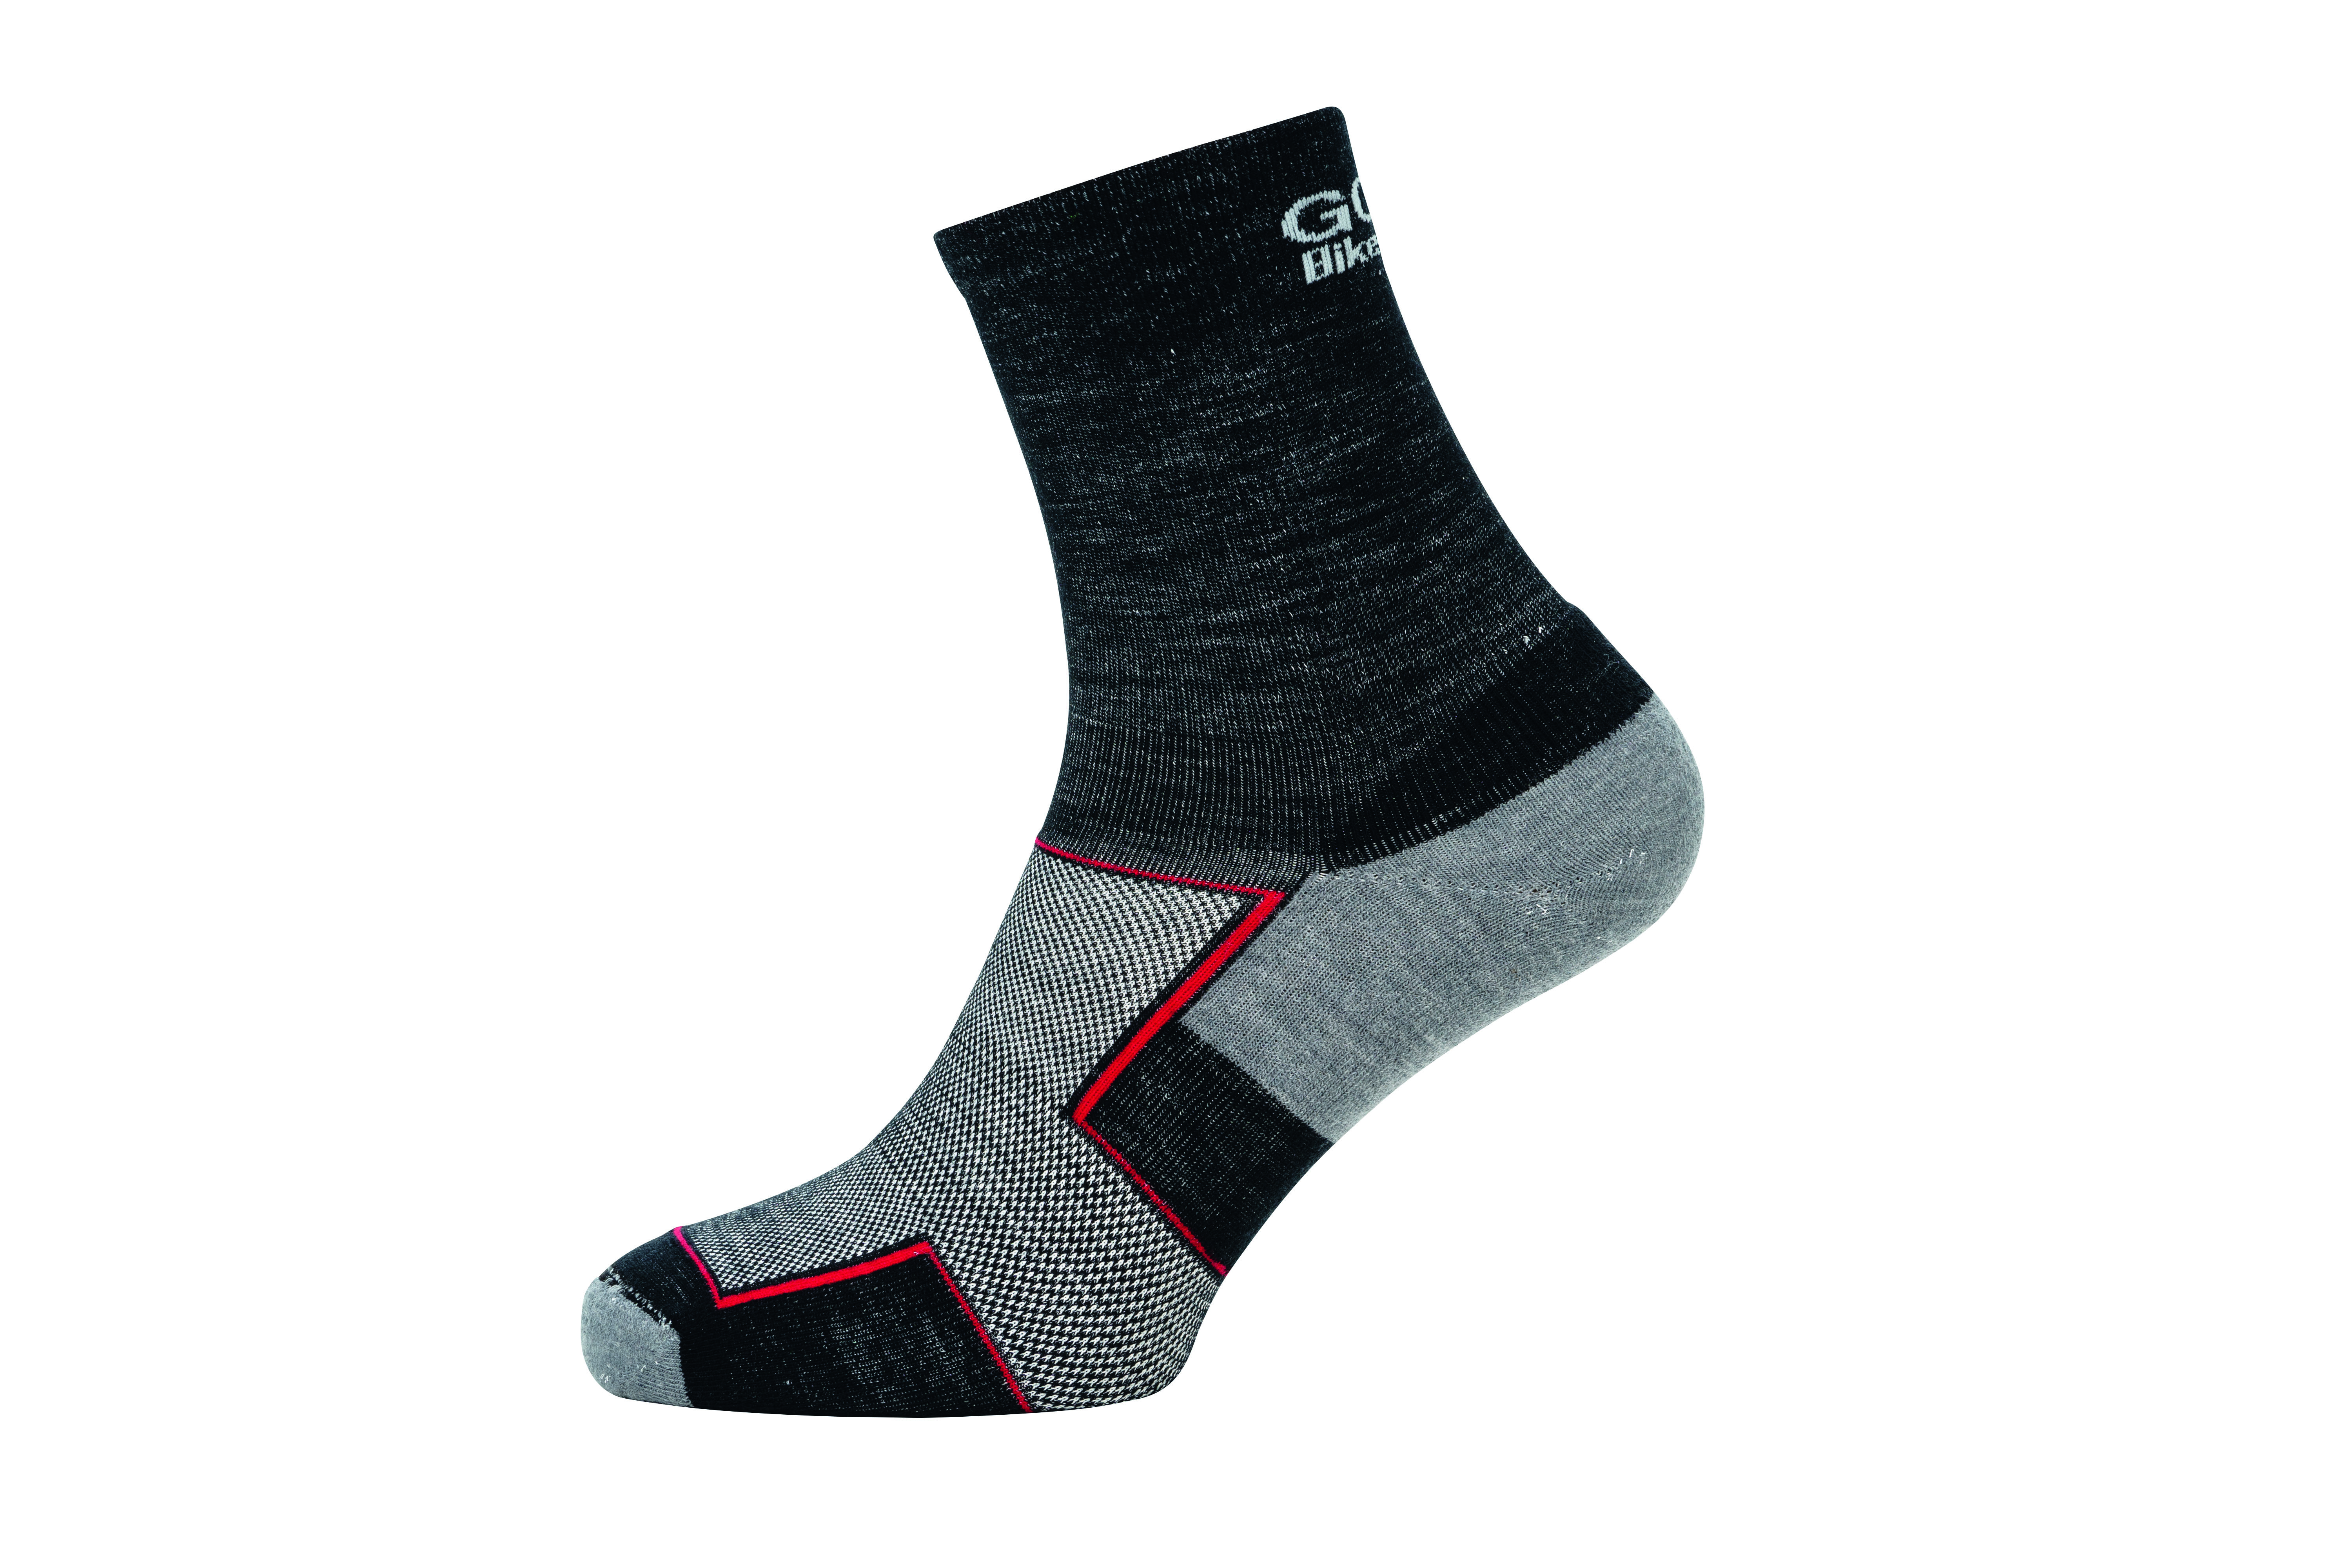 New Gore socks combine ePTFE fibers with Merino wool | Bicycle Retailer ...